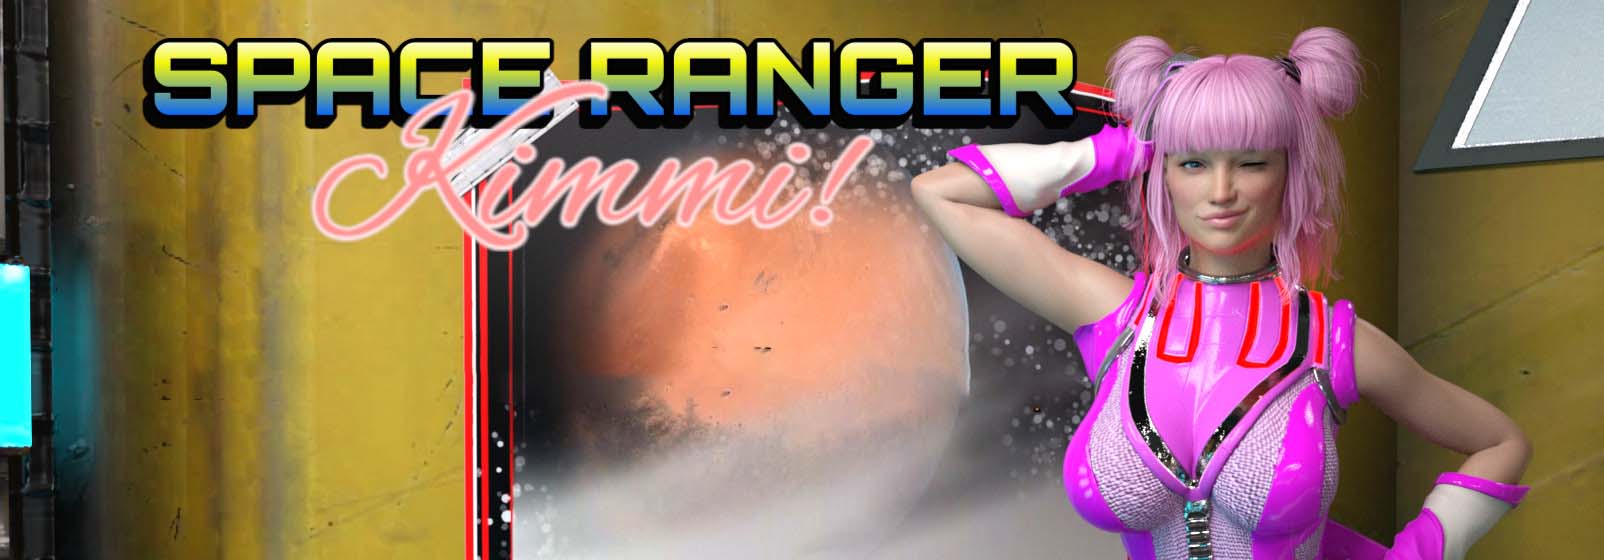 Ranger spațial Kimmi!